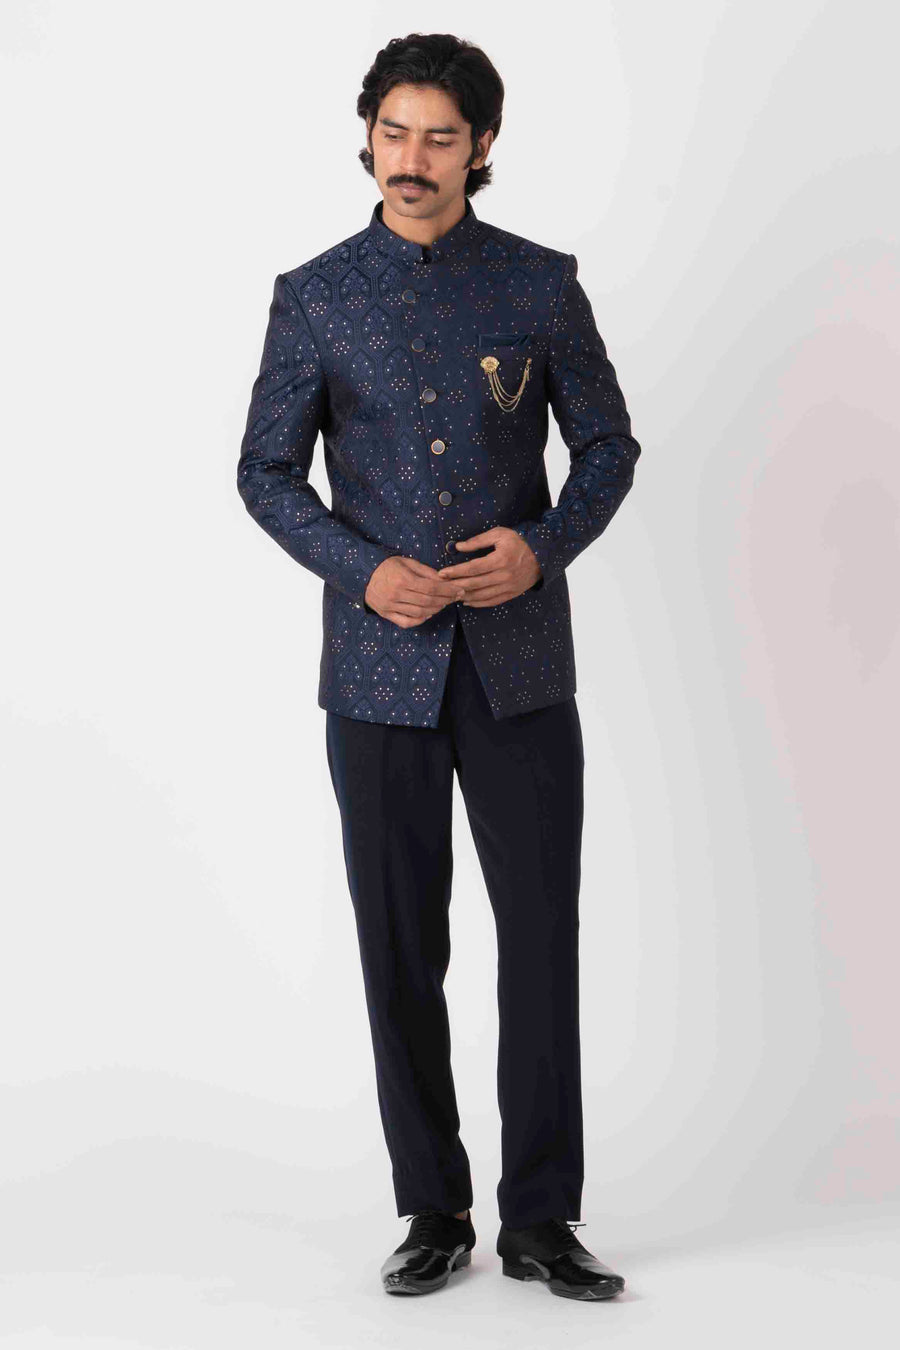 INMONARCH Mens Navy Blue Jodhpuri Suit with Trimming Work JO243R34 34  Regular Navy Blue at Amazon Men's Clothing store